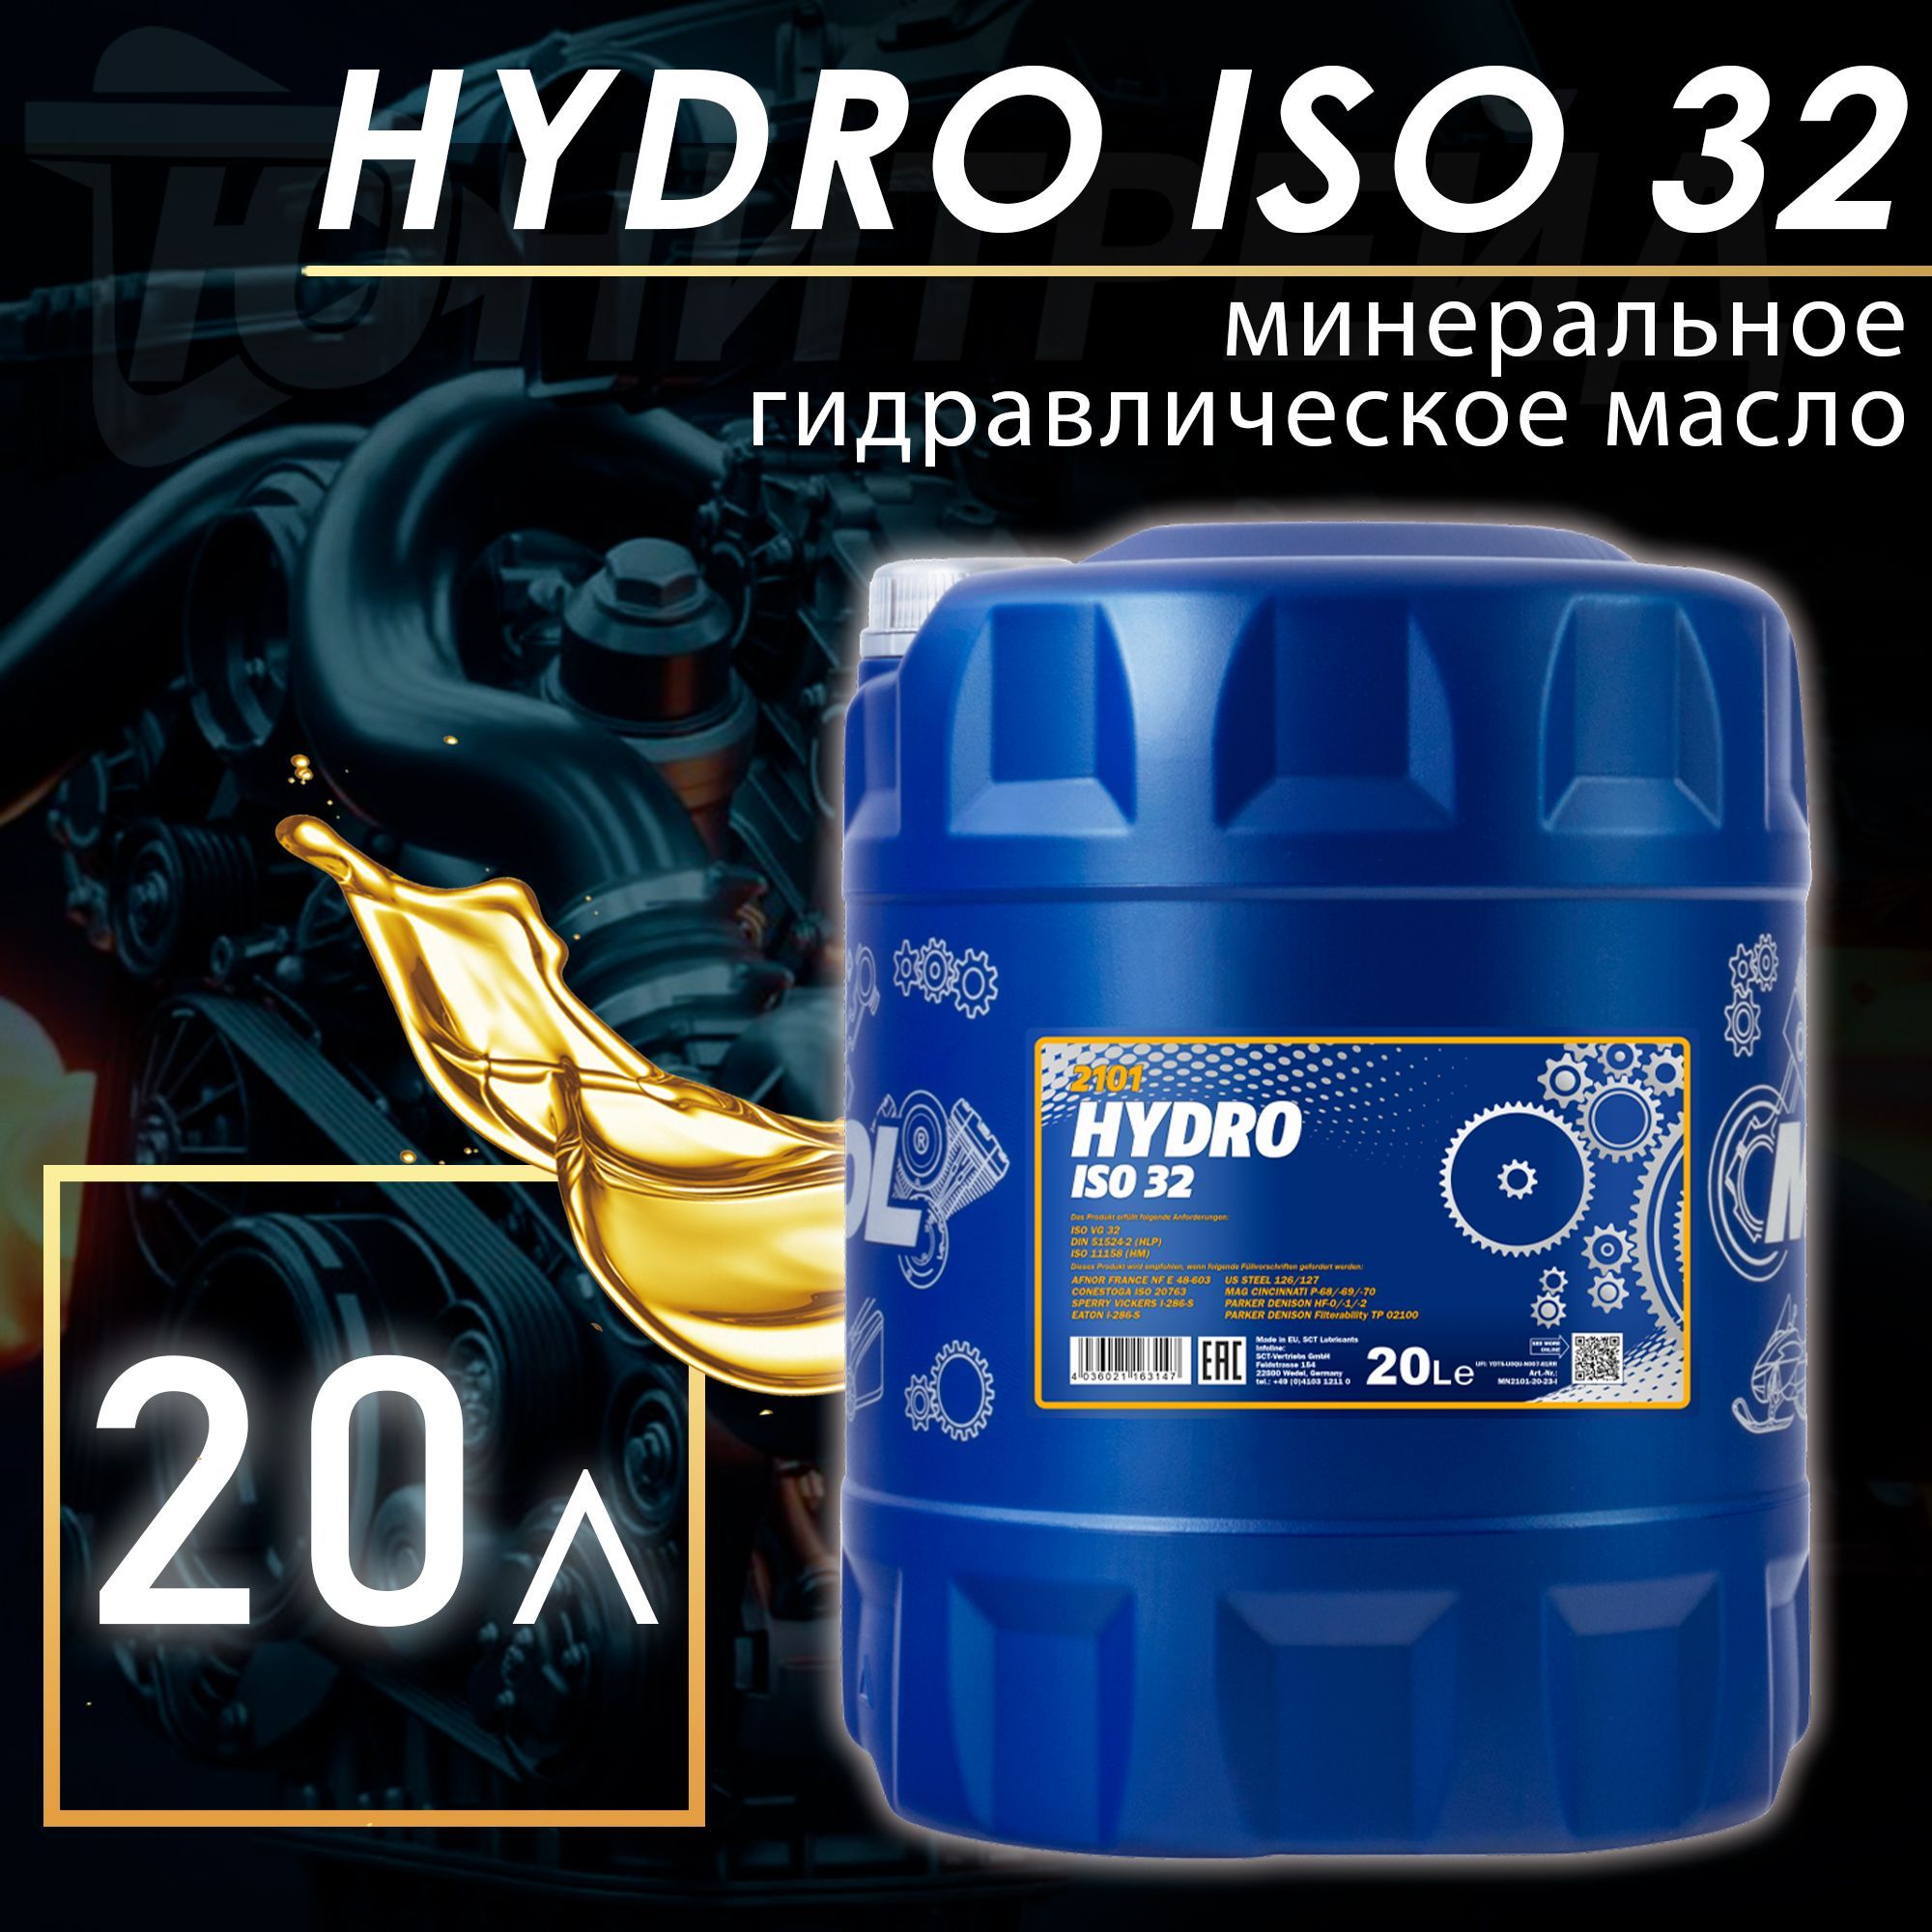 Гидравлическое масло iso 32. Mannol Hydro ISO 32 мин. 20л масло гидравлическое. Масло Favorit Hydro ISO 32 20л. HLD-din 51524 t2 ISO VG 22.